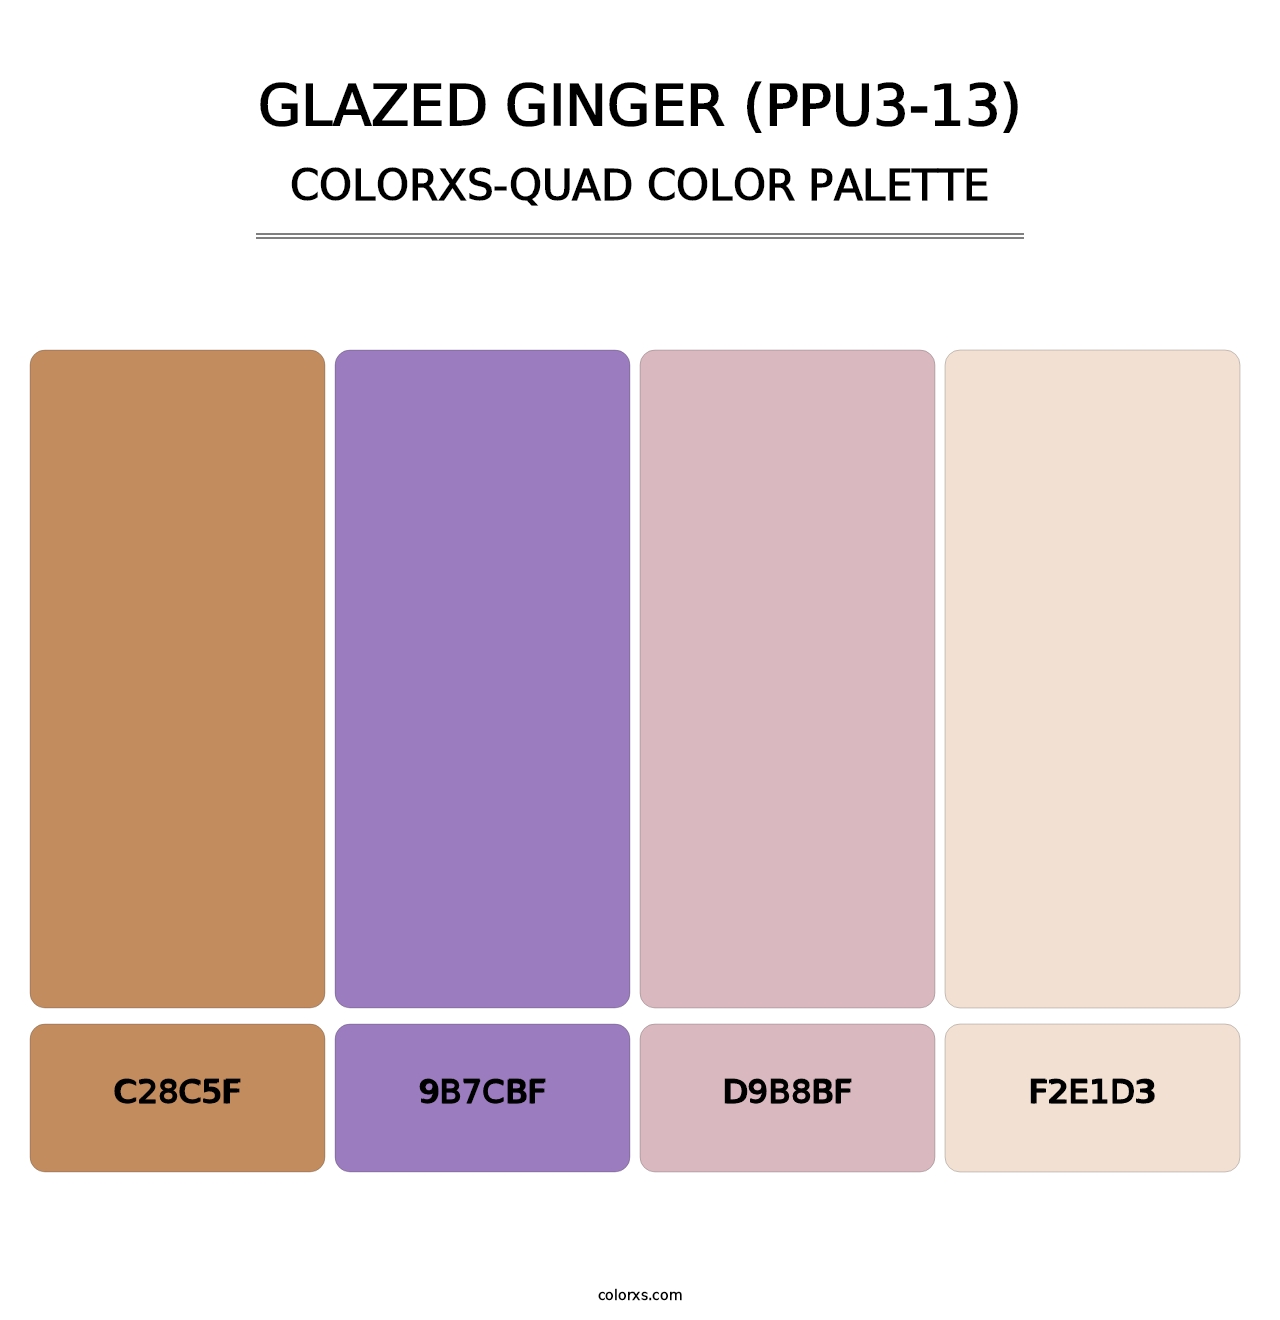 Glazed Ginger (PPU3-13) - Colorxs Quad Palette